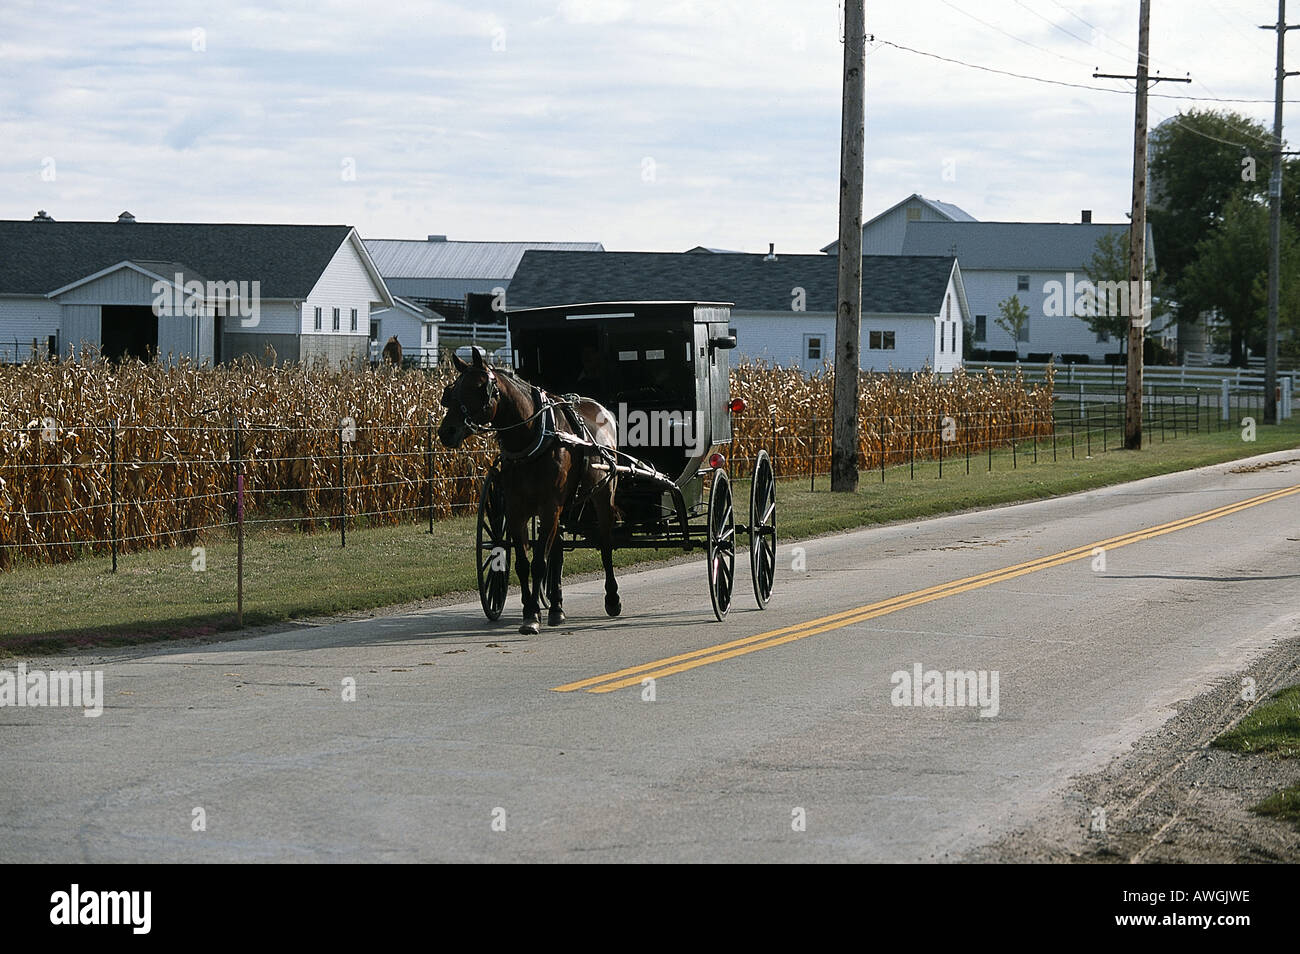 USA, Indiana, Shipshewana, Amish horse-drawn buggy in small rural village Stock Photo